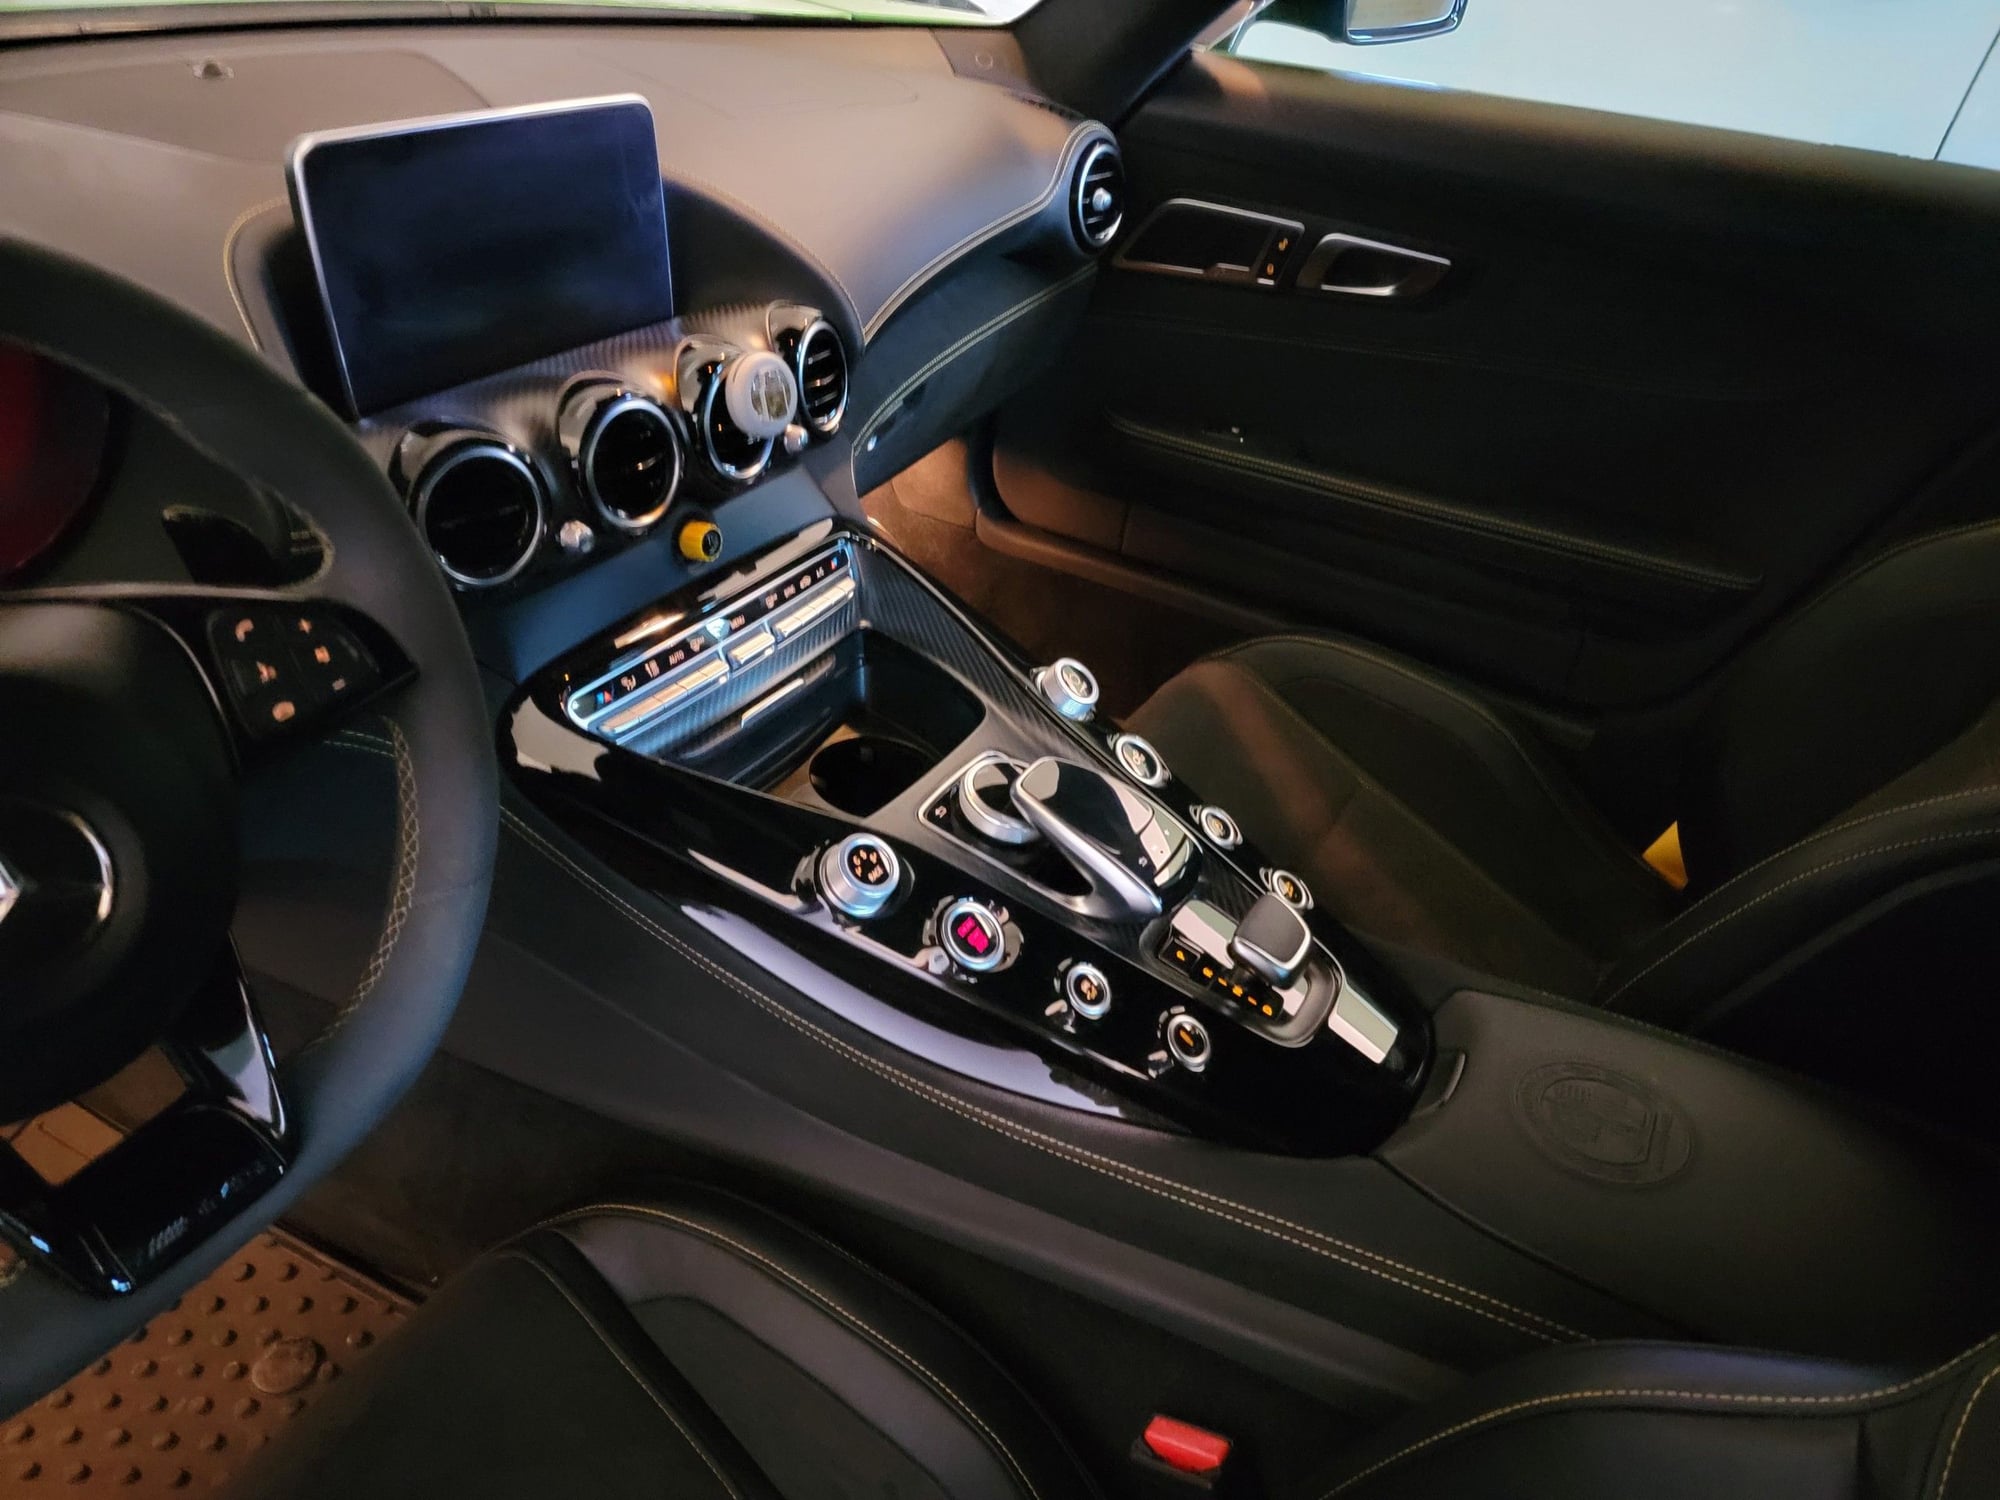 2018 Mercedes-Benz AMG GT R - 2018 AMG GTR; 7K Miles; 155K OBO - Used - VIN WDDYJ7KA6JA017031 - 6,980 Miles - 8 cyl - 2WD - El Paso, TX 79938, United States